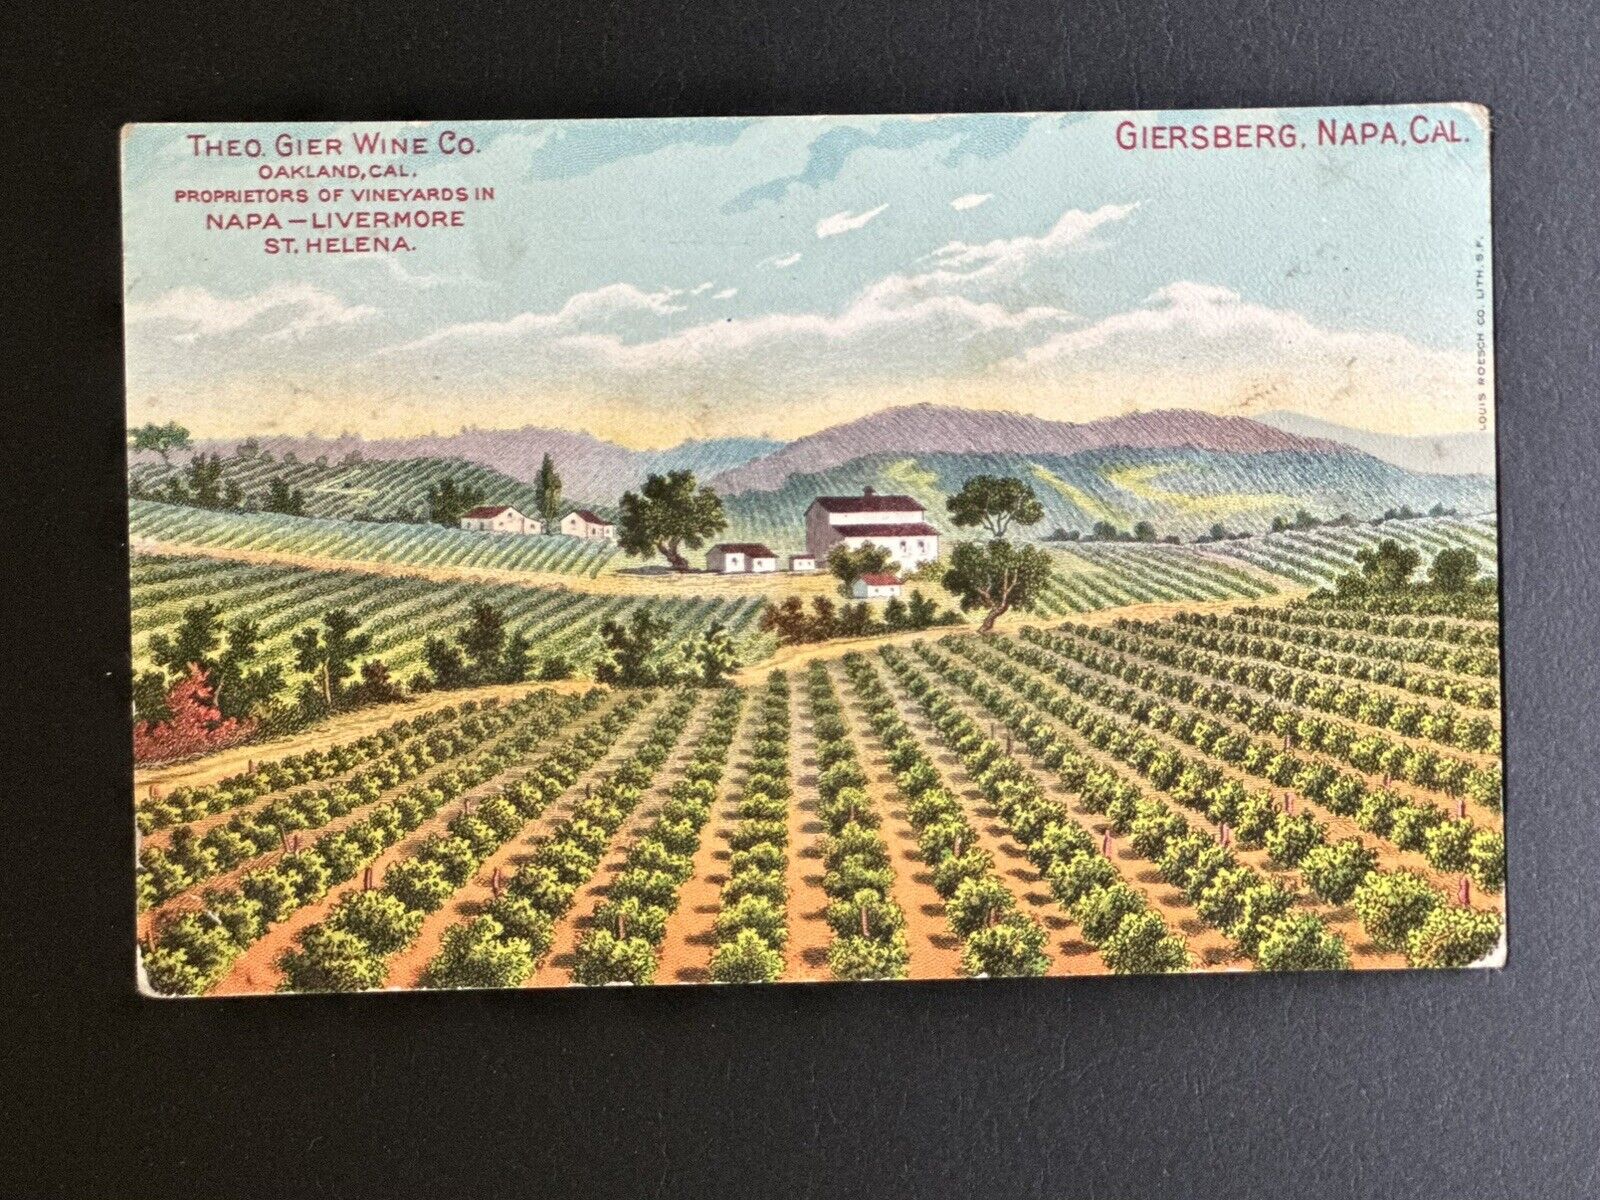 Postcard PROPRIETORS OF VINEYARDS NAPA - LIVERMORE Theo Gier Wine California R16